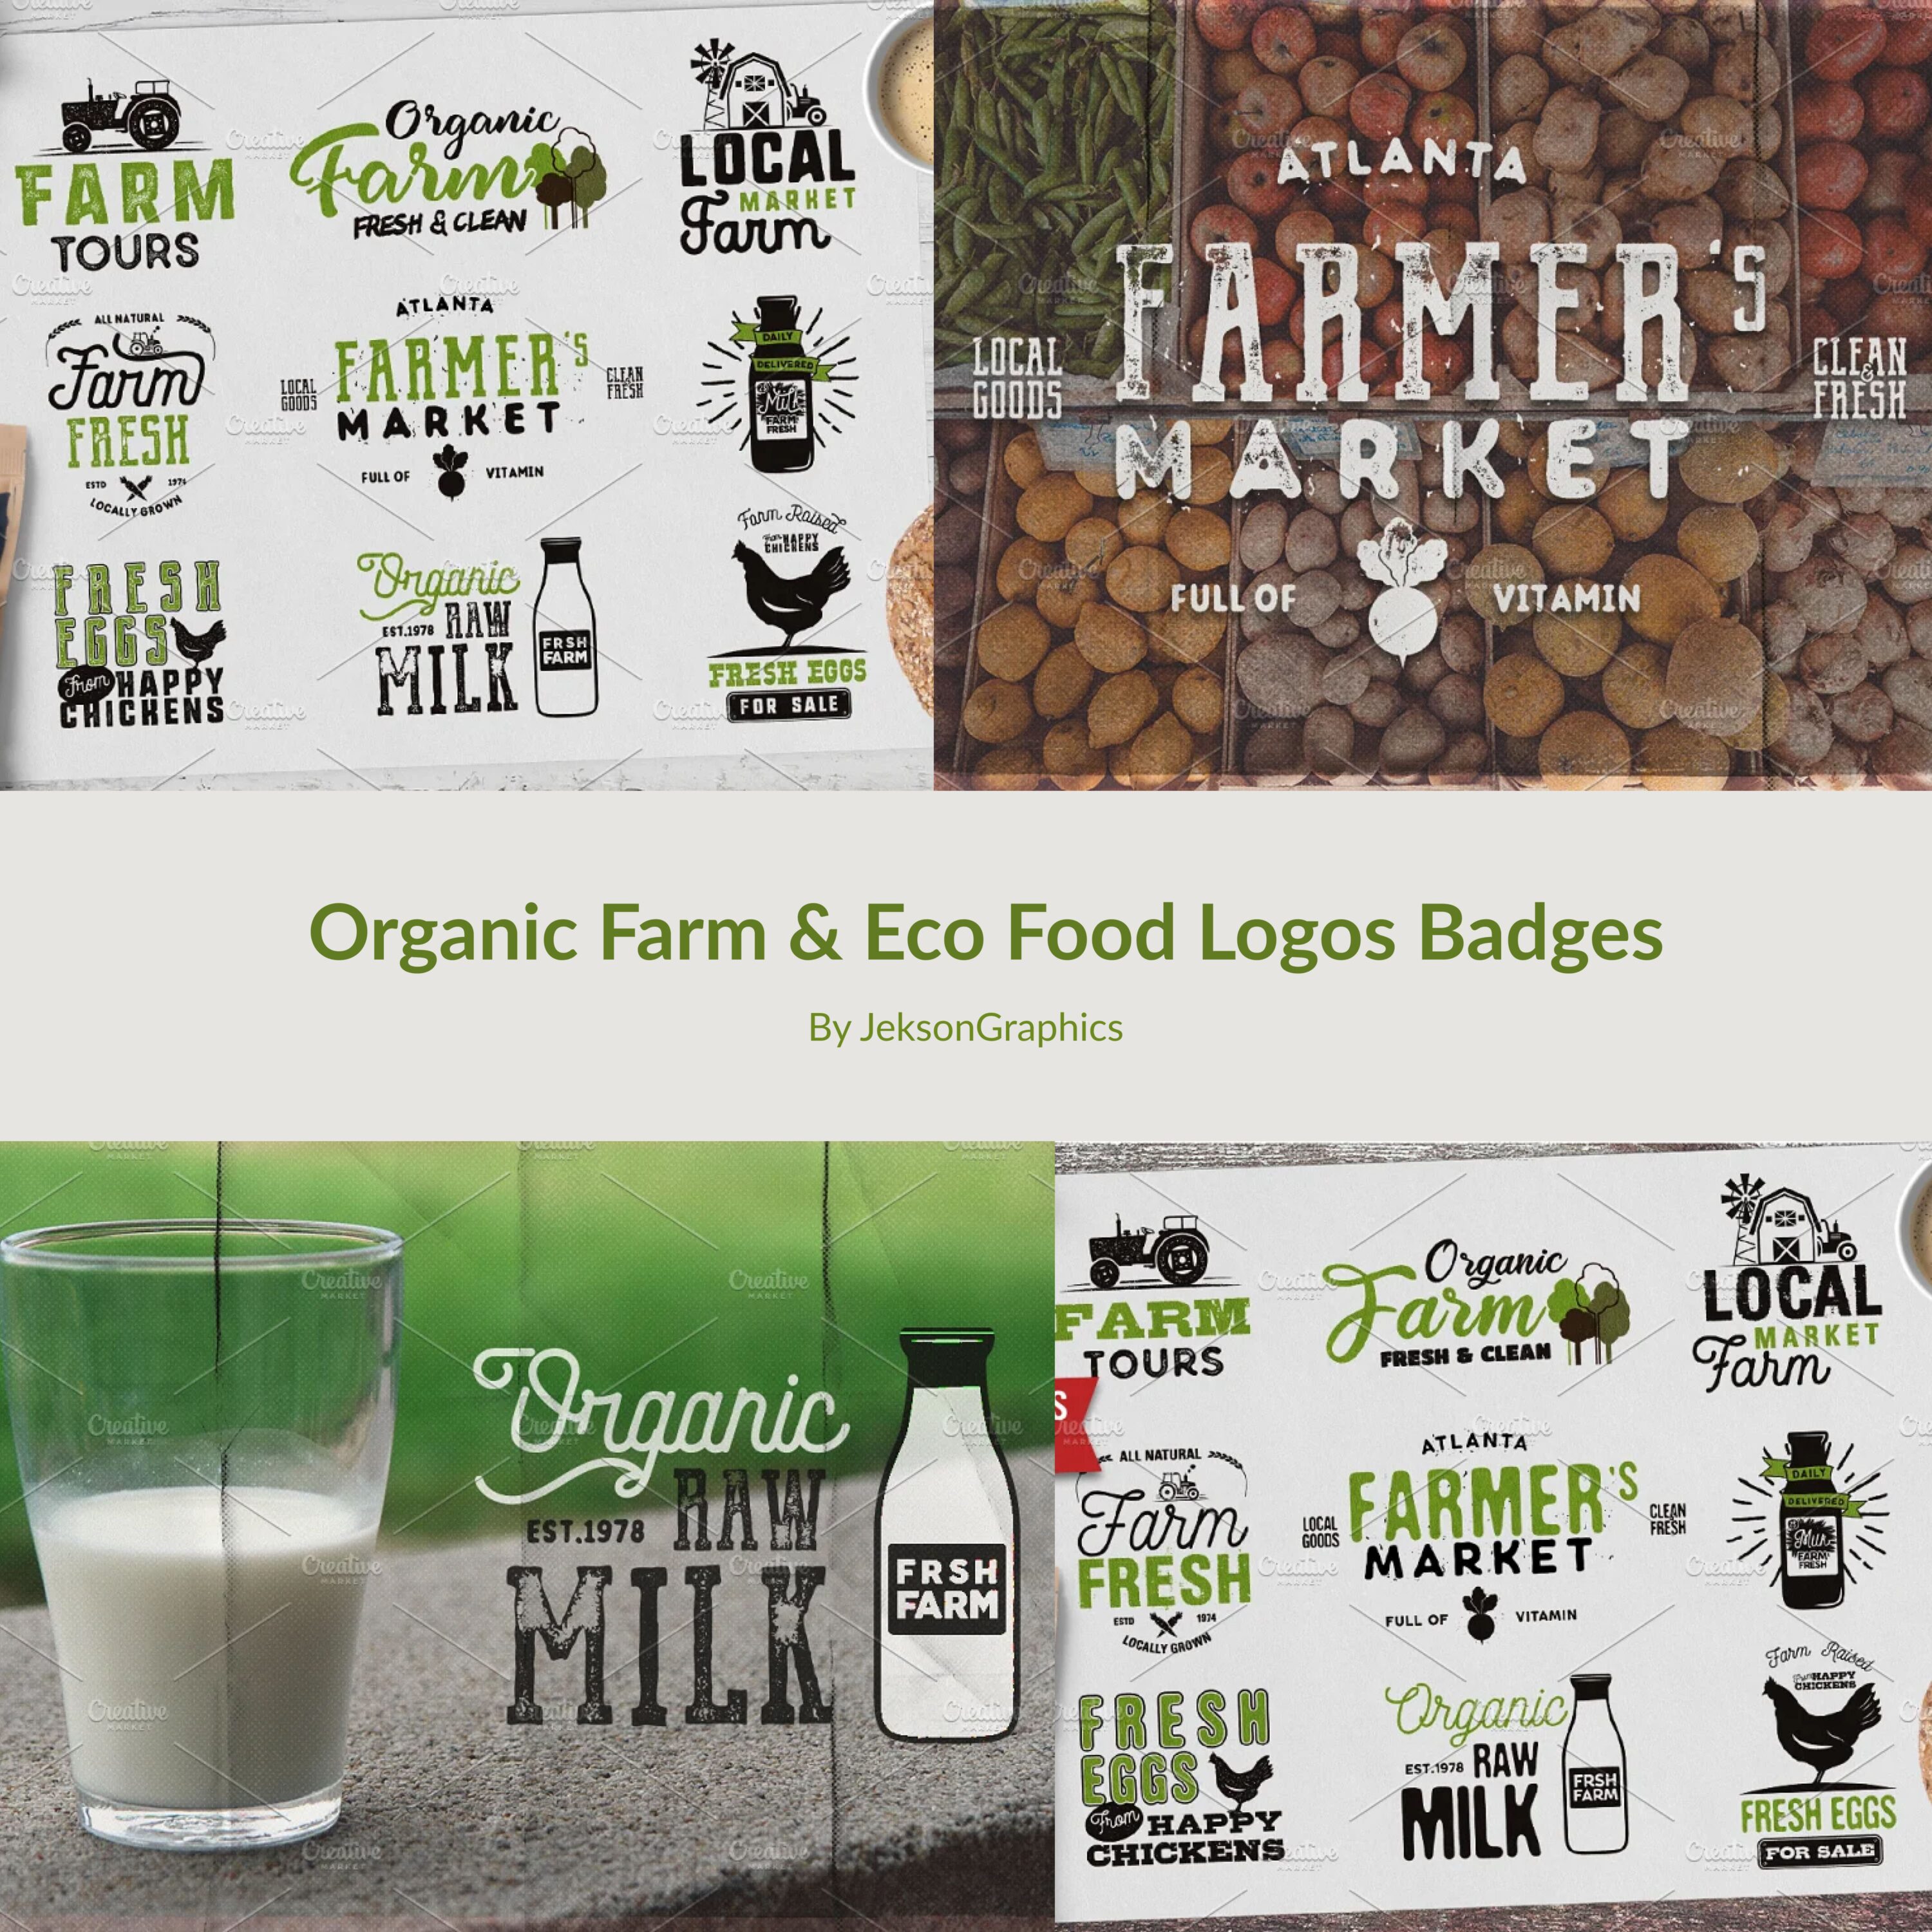 Organic Farm & Eco Food Logos Badges.